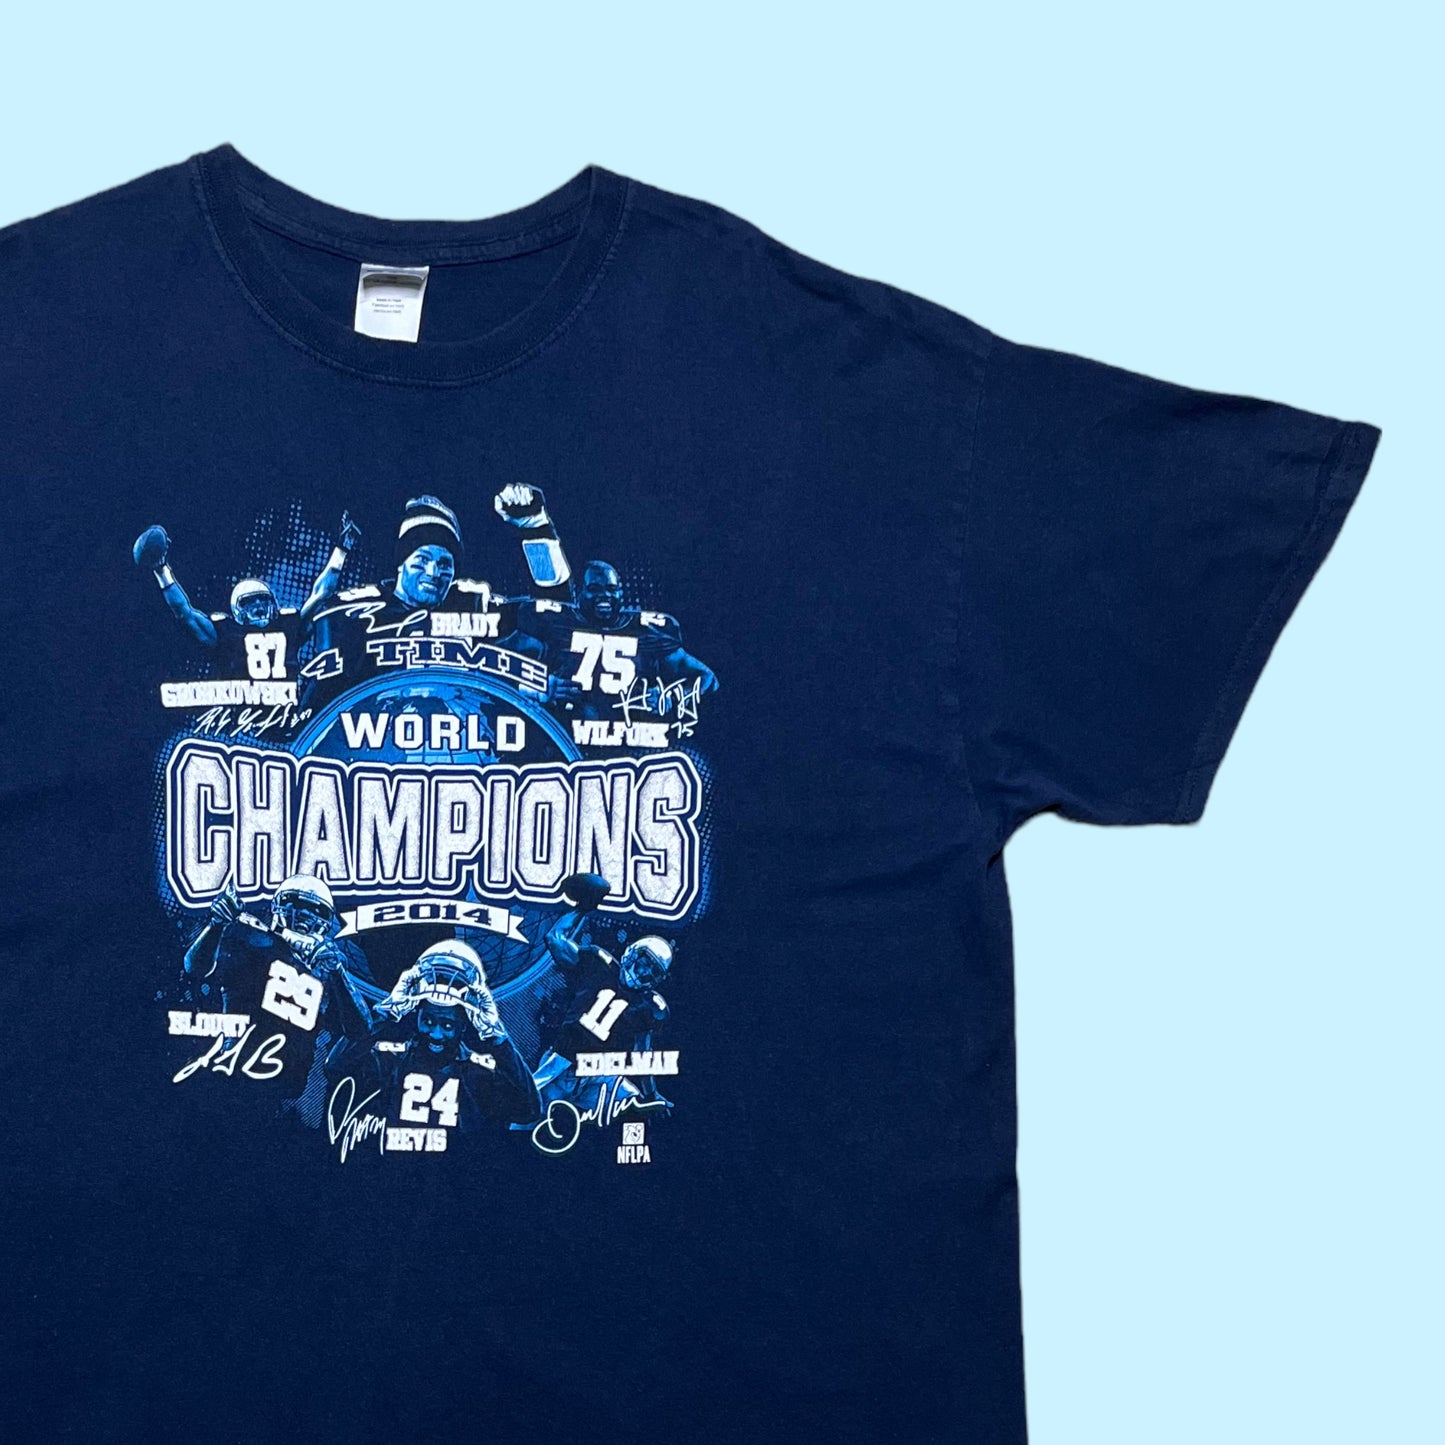 Patriots 2014 World Champions T-Shirt - XL